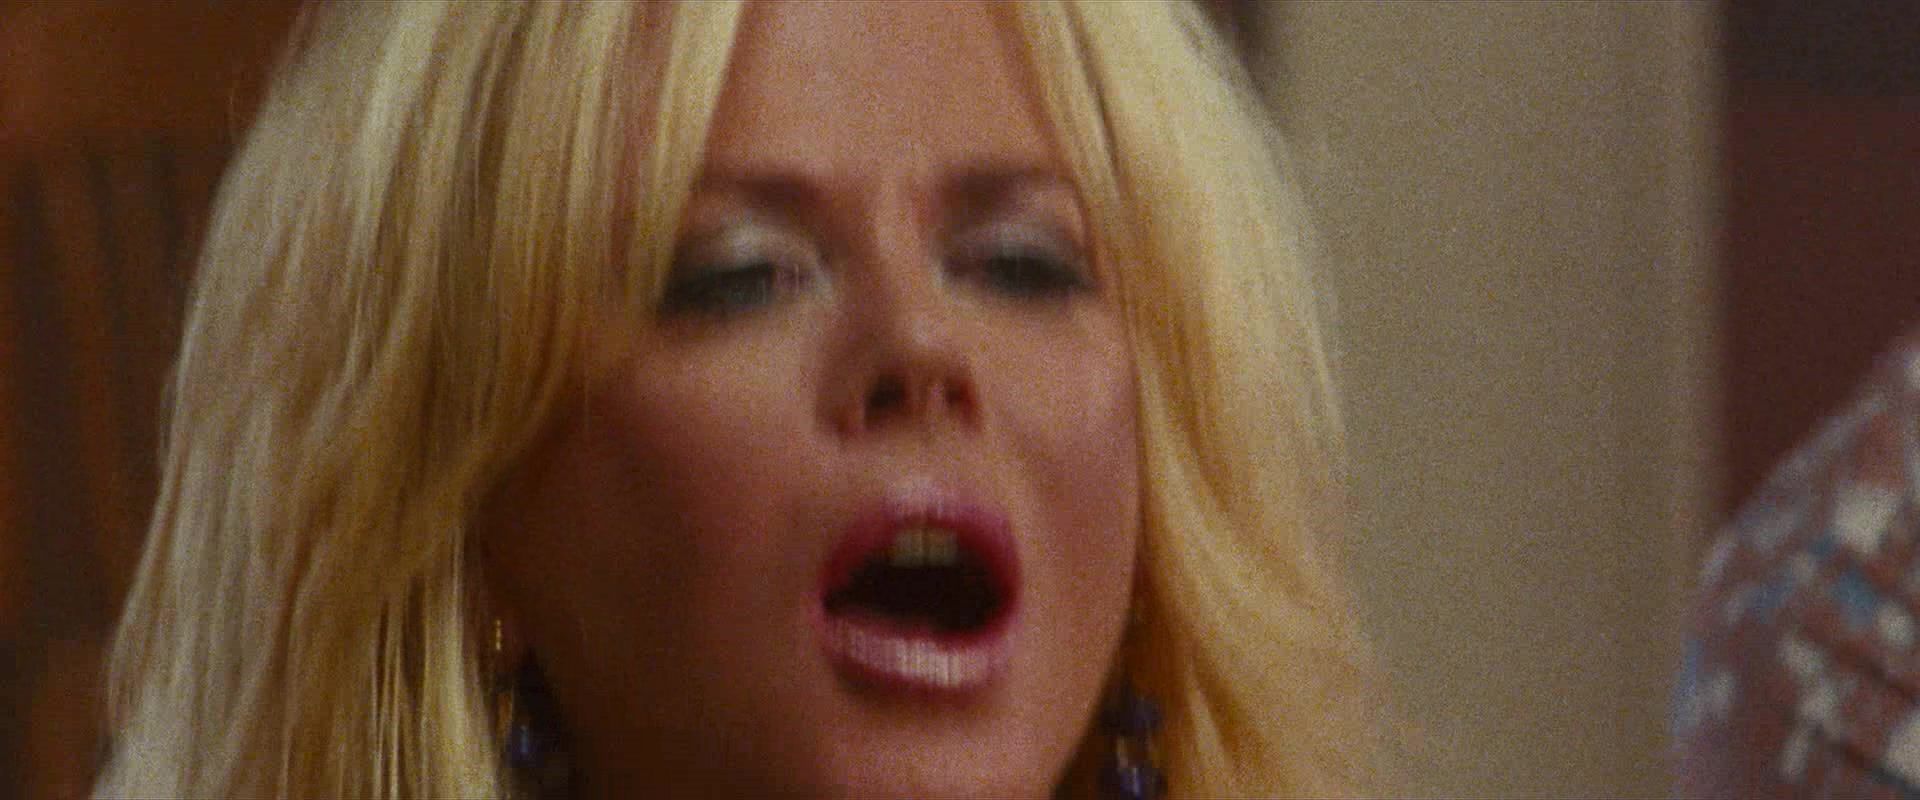 Small Tits Porn Hollywood hot scene Nicole Kidman - The Paperboy (2012) Femdom